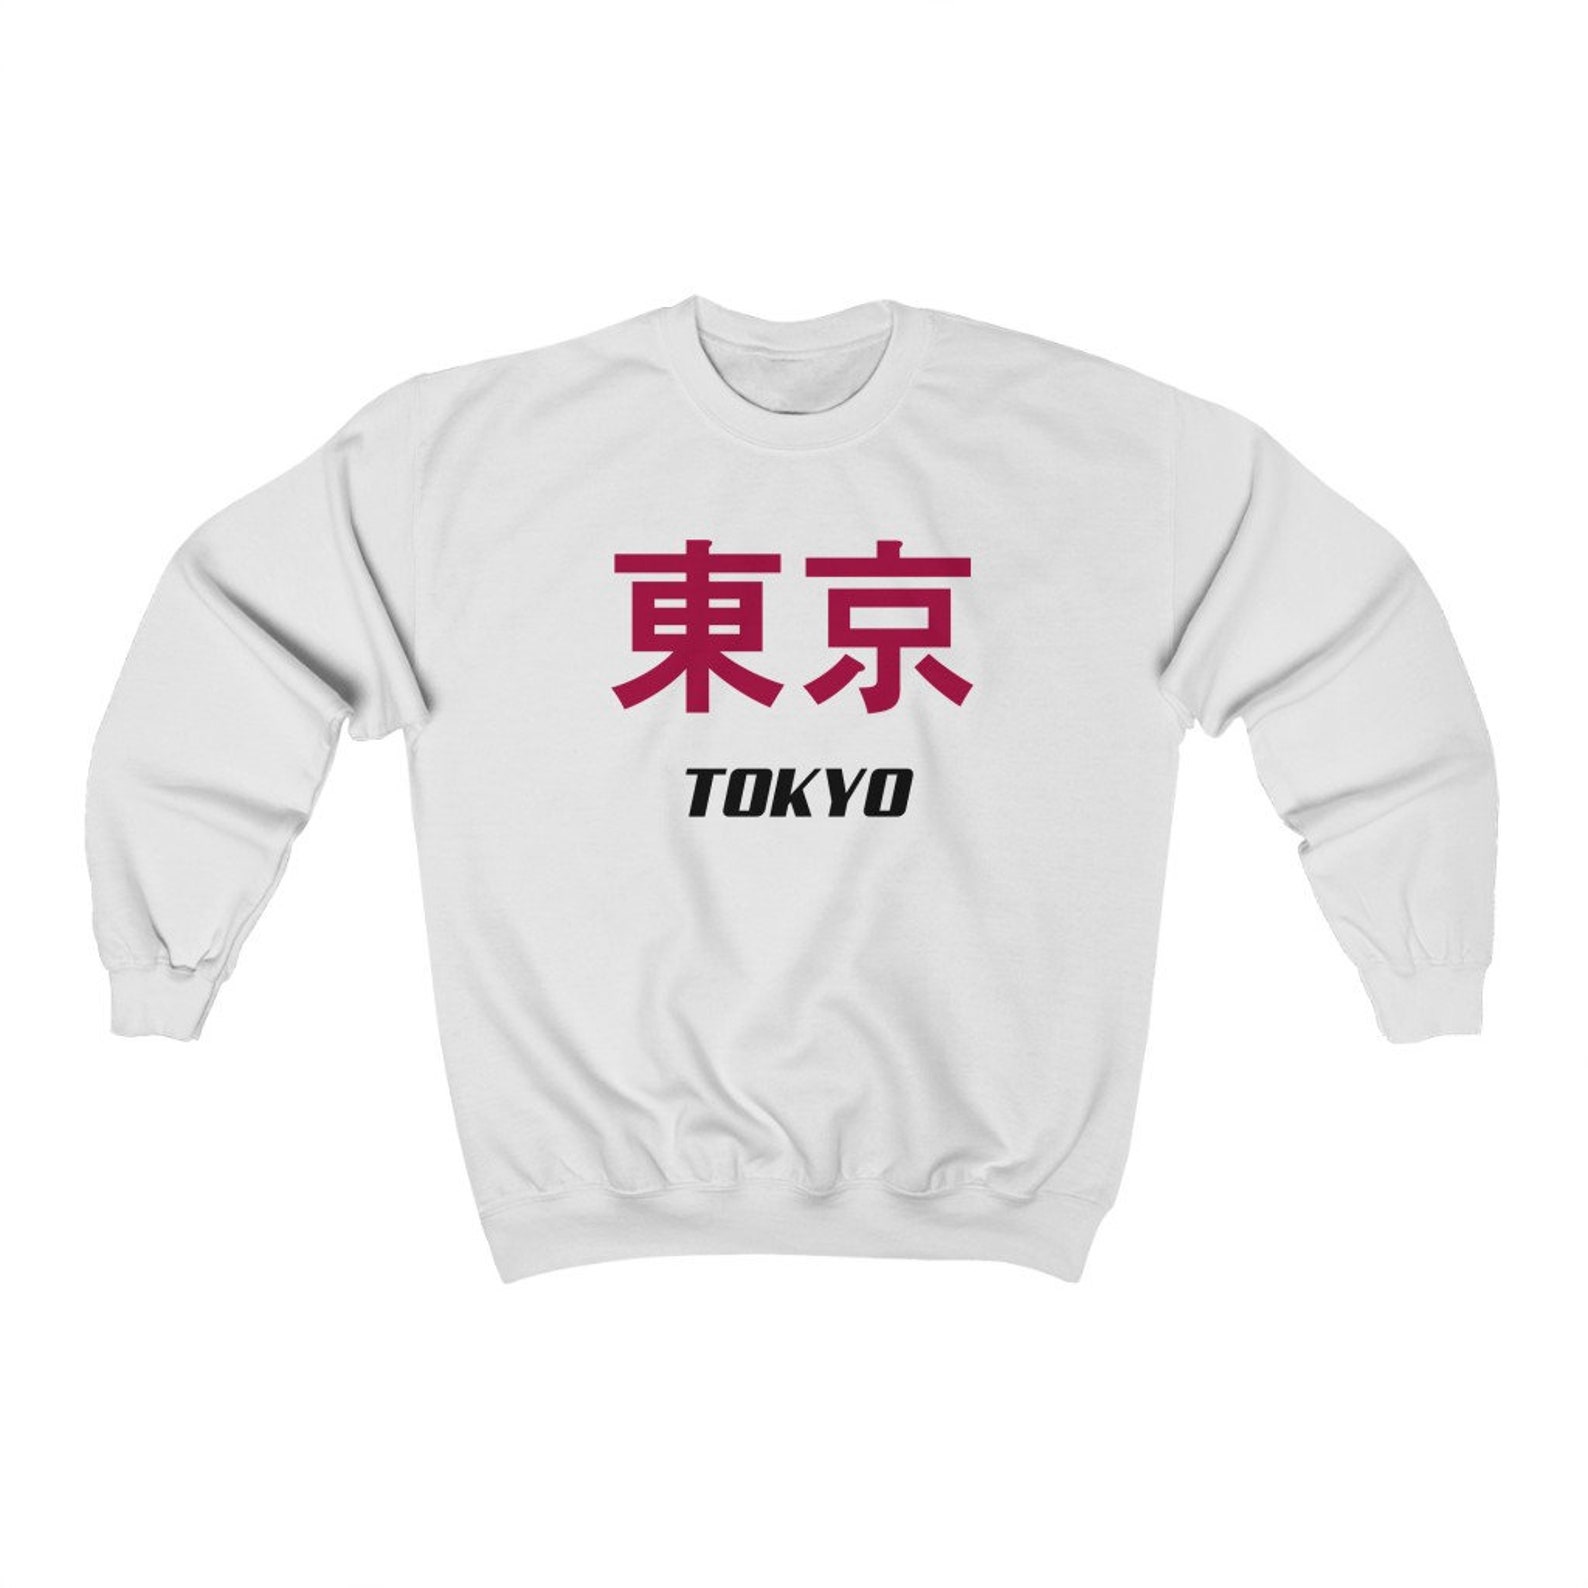 Tokyo Sweatshirt Tokyo Tee Japan Shirt Tokyo Shirt Japan | Etsy